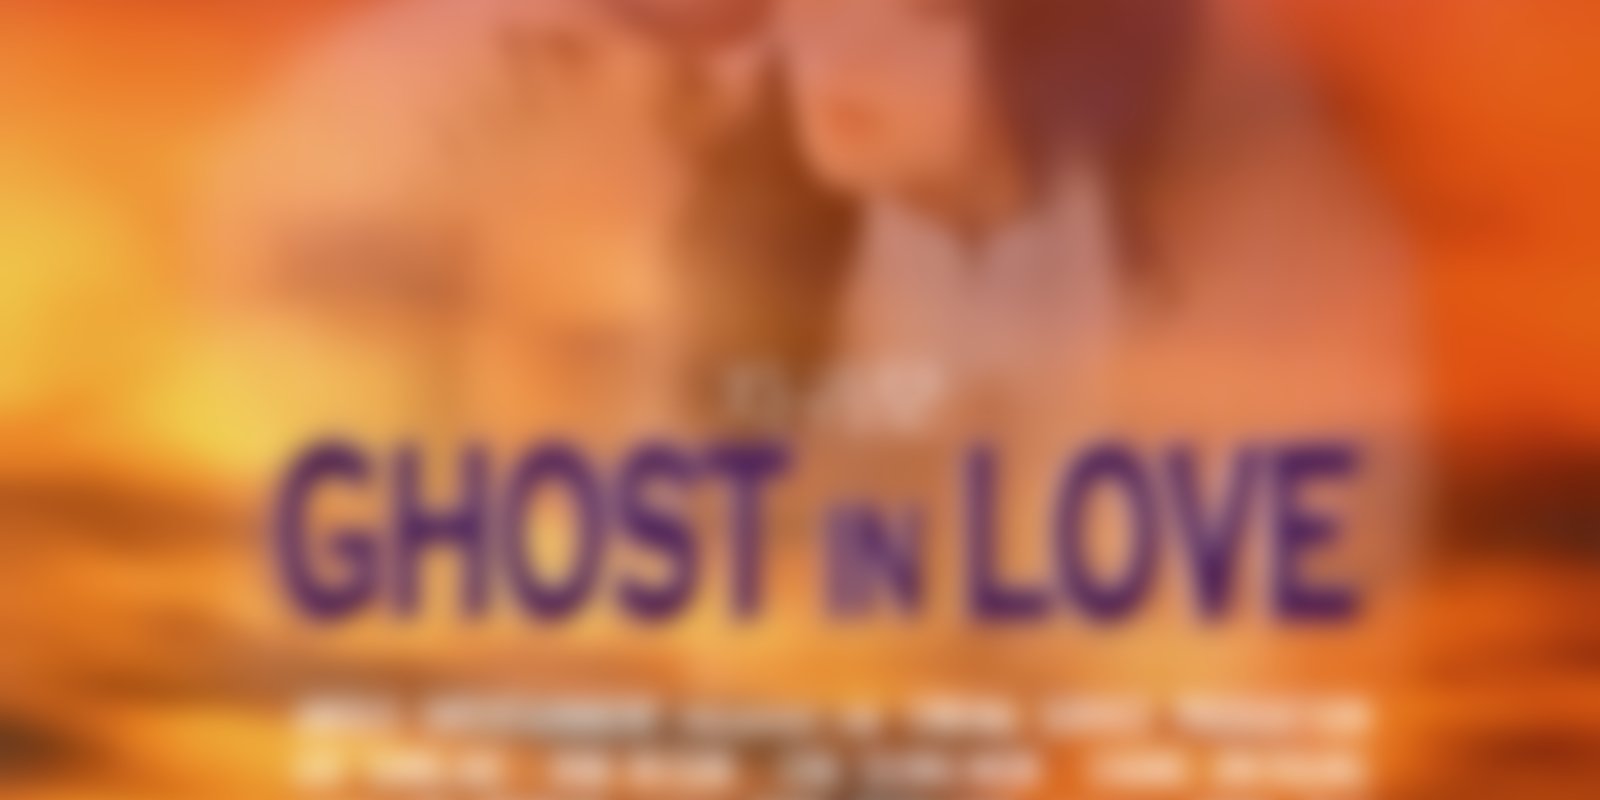 Ghost in Love